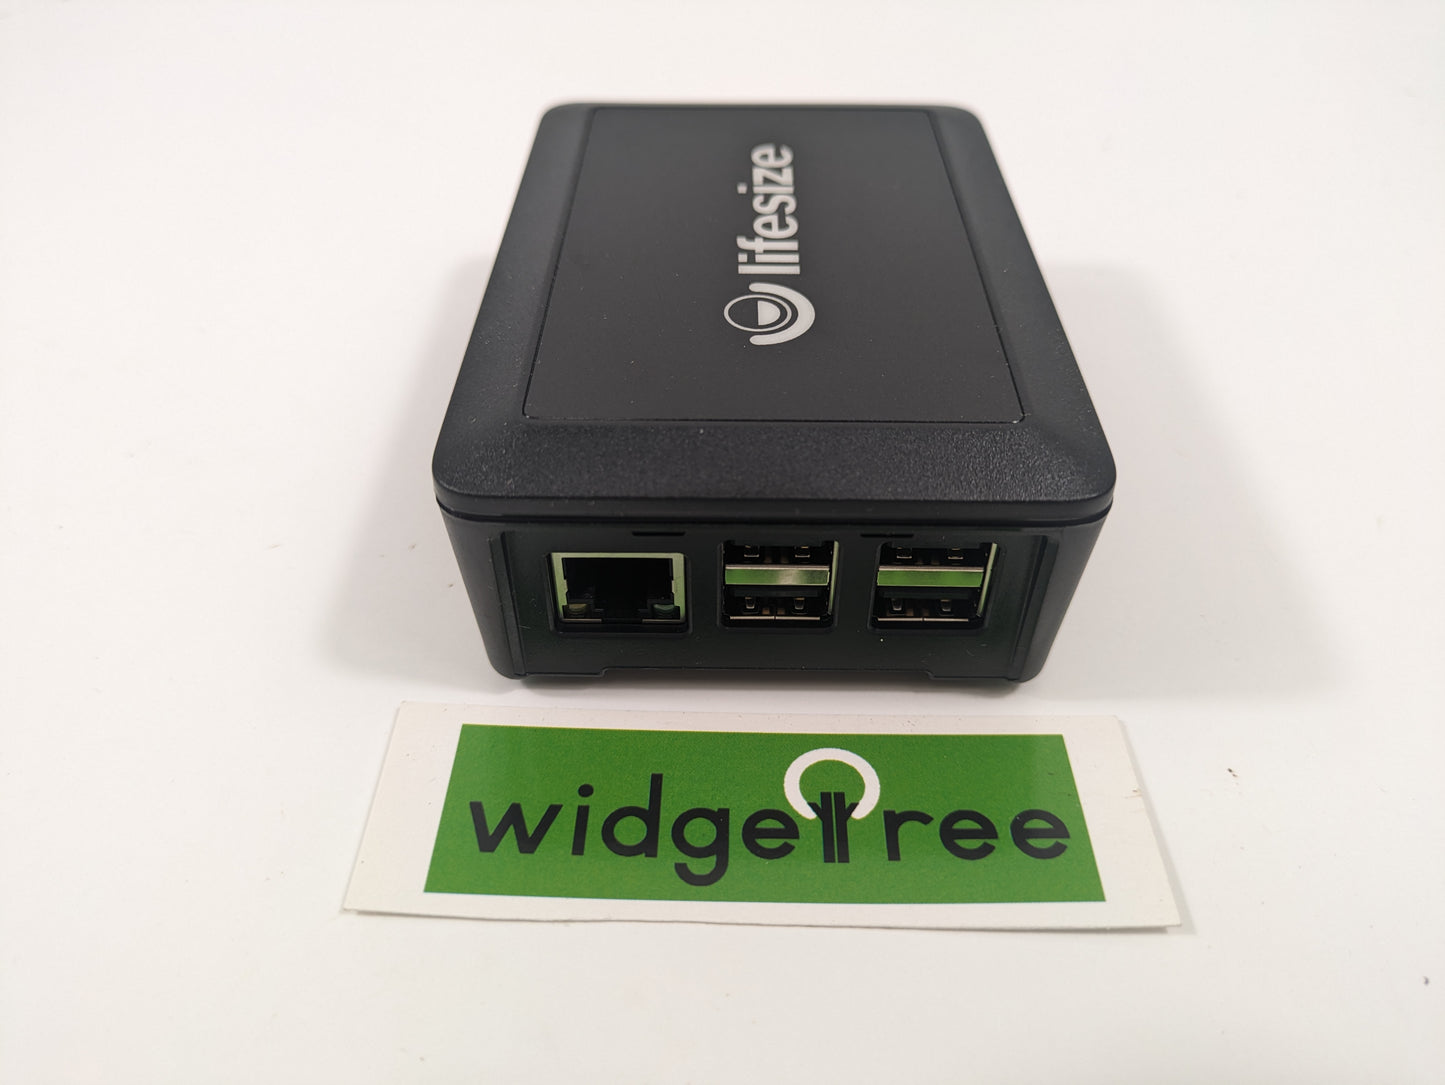 Lifesize Share Wireless Presentation Gateway - 1000-0000-0922 Used